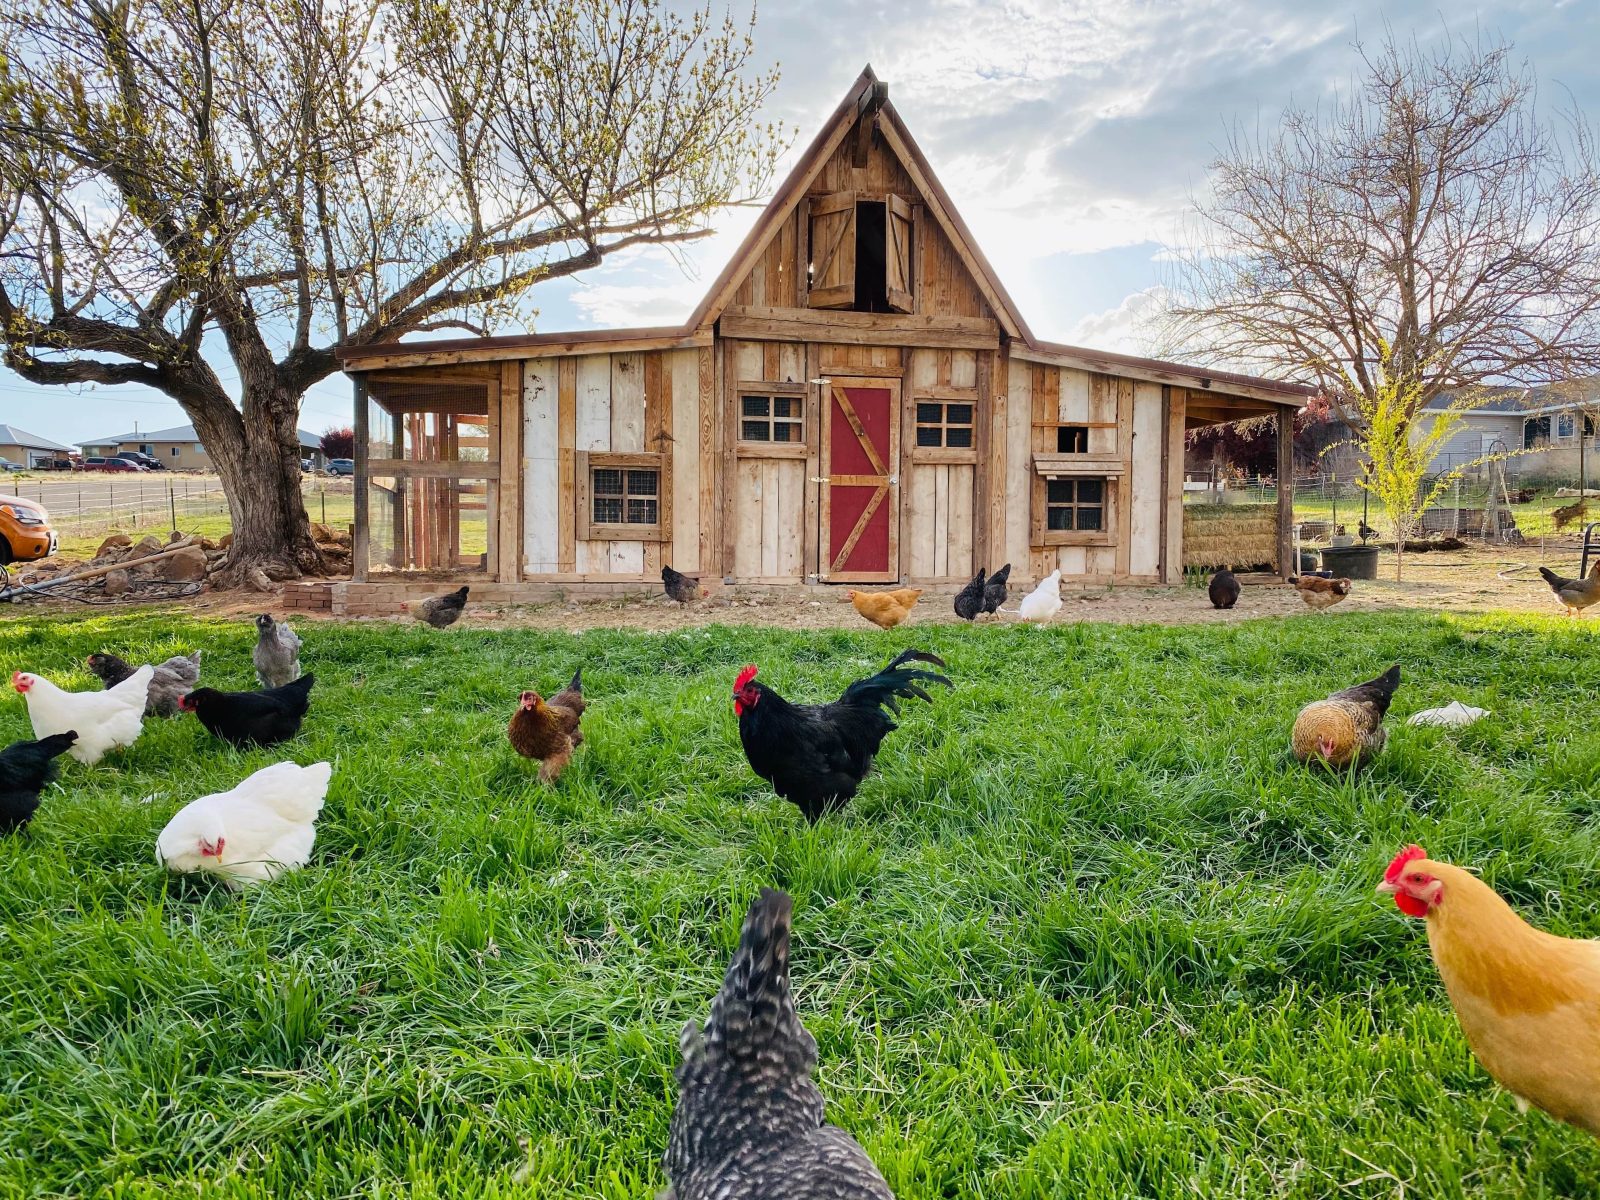 organic chicken farming